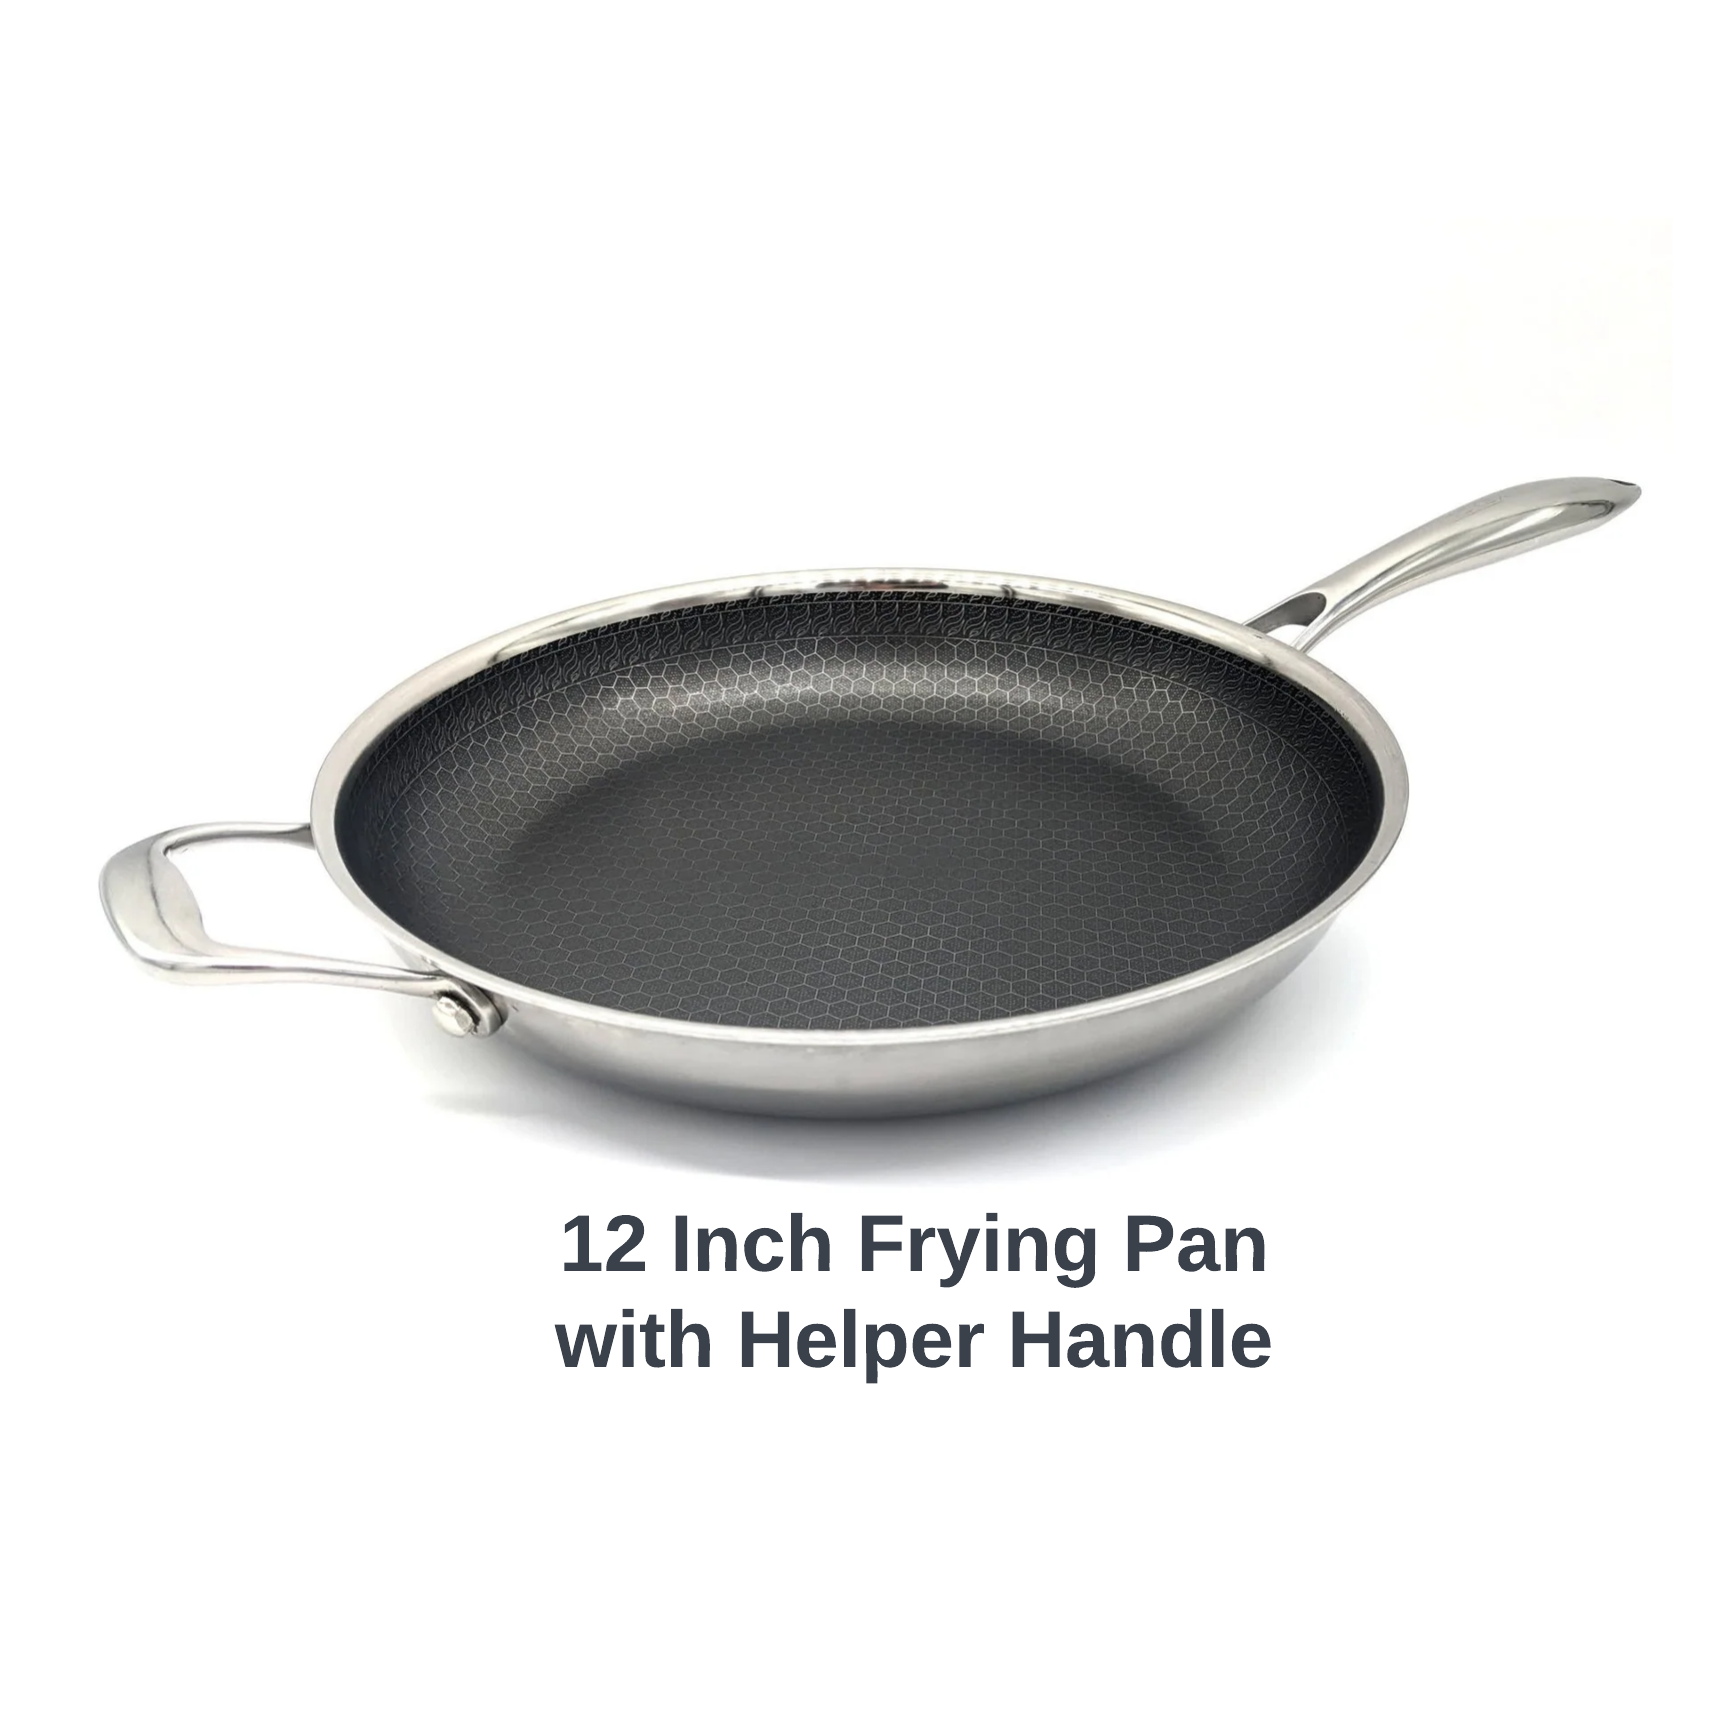 12 HexClad Hybrid Pan